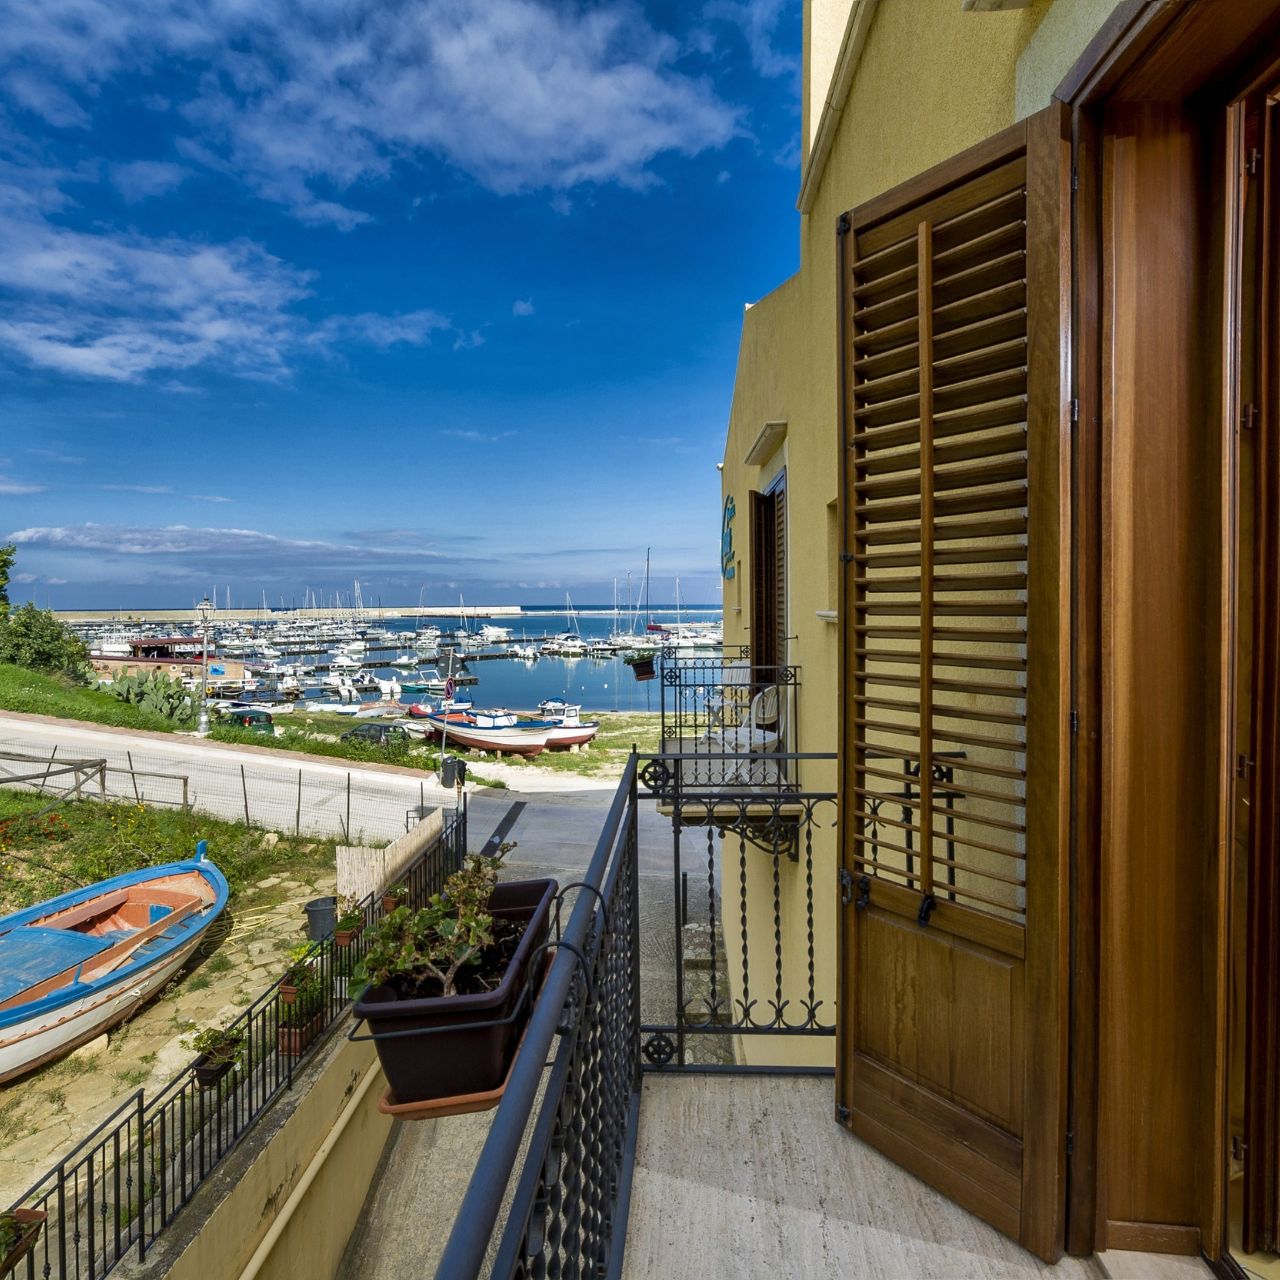 Hotel Cala Marina - Castellammare del Golfo - HOTEL INFO